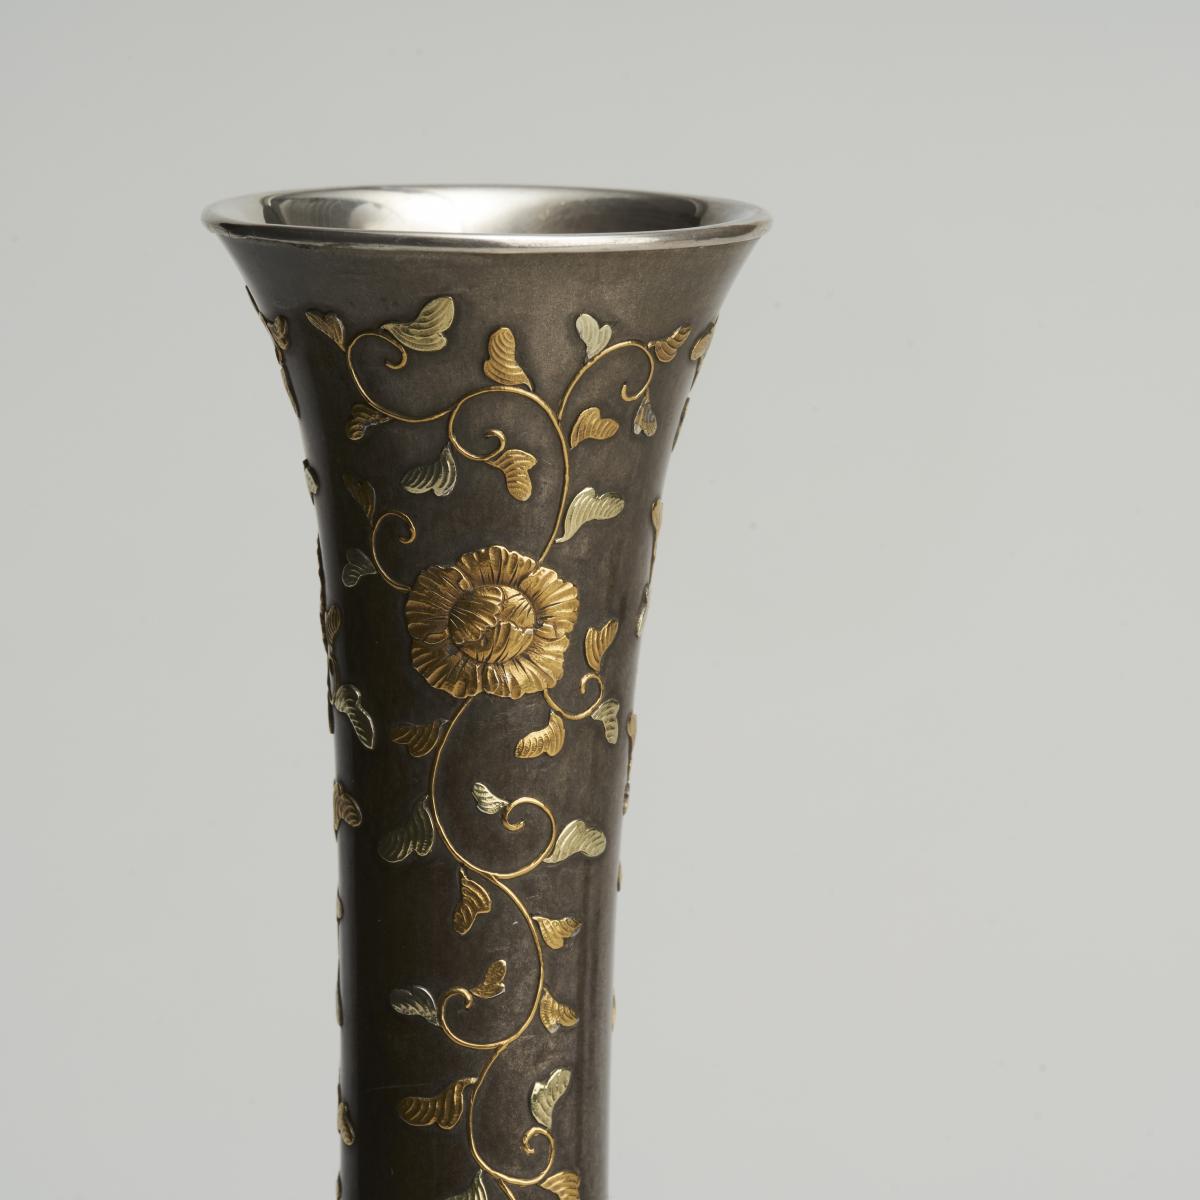 Japanese Meiji Period silver vase